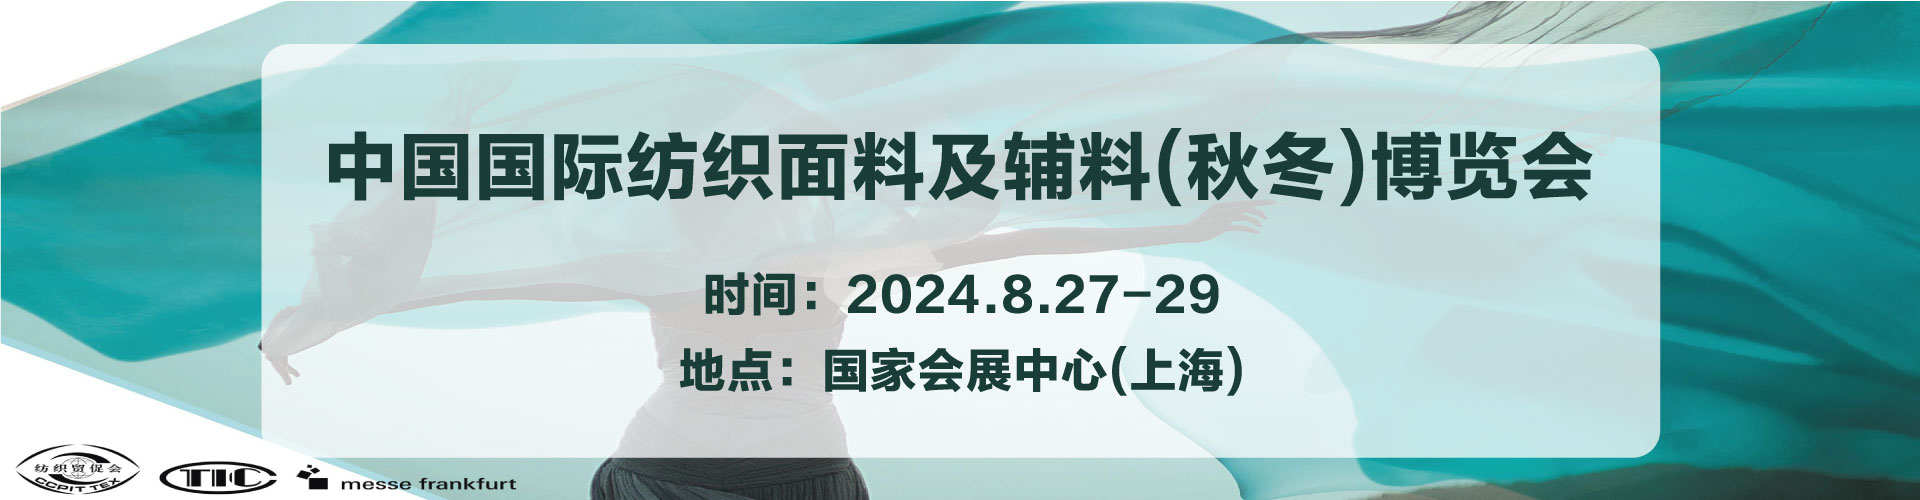 2024intertextile中国国际纺织面料及辅料博览会